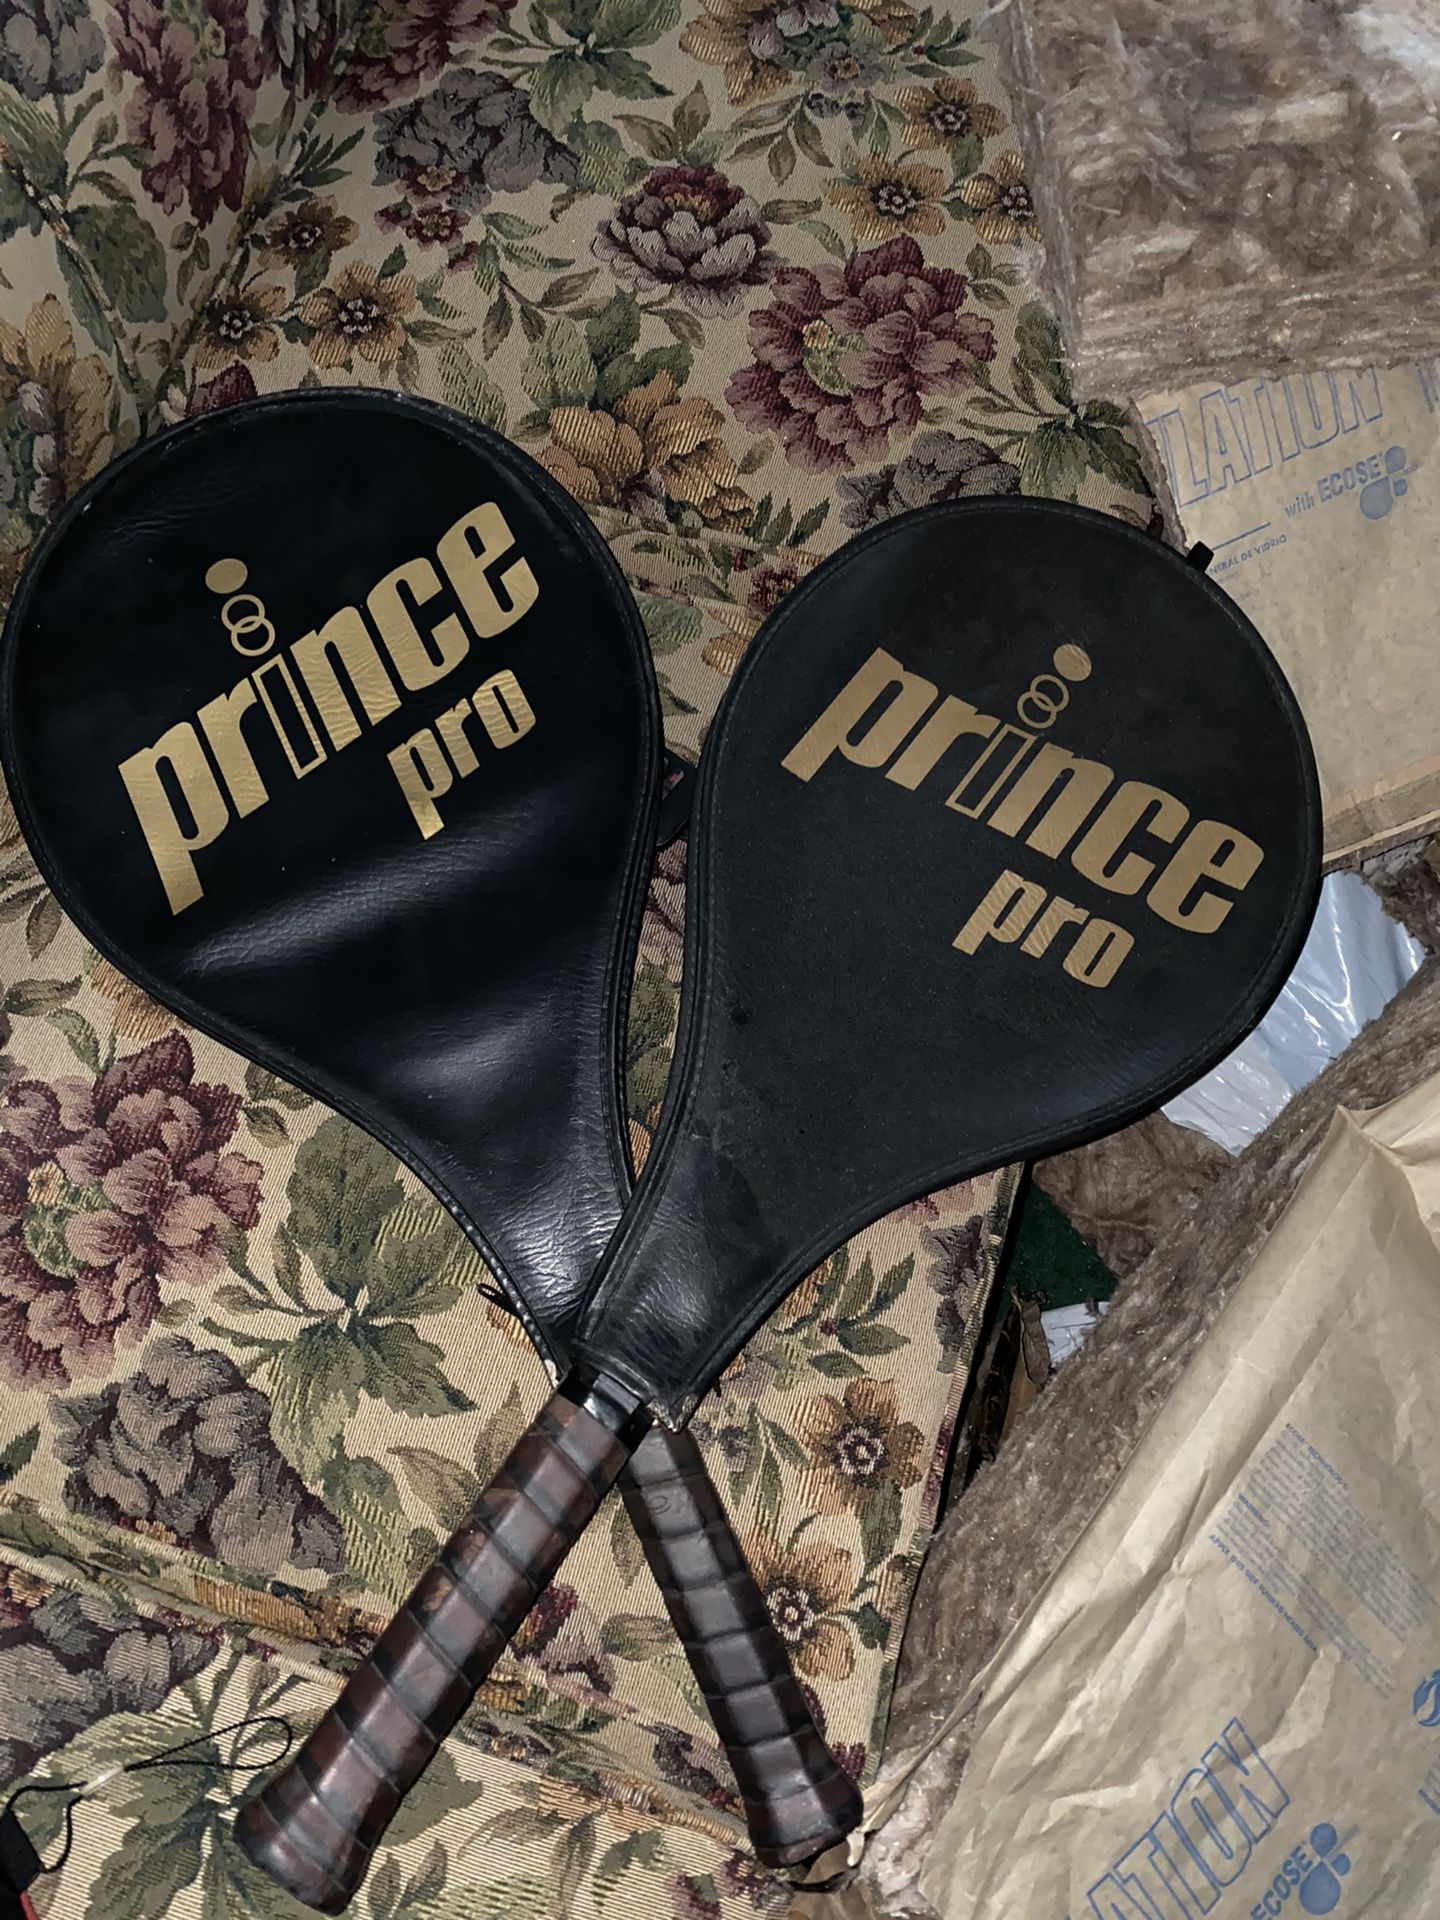 Prince Pro Tennis Rackets